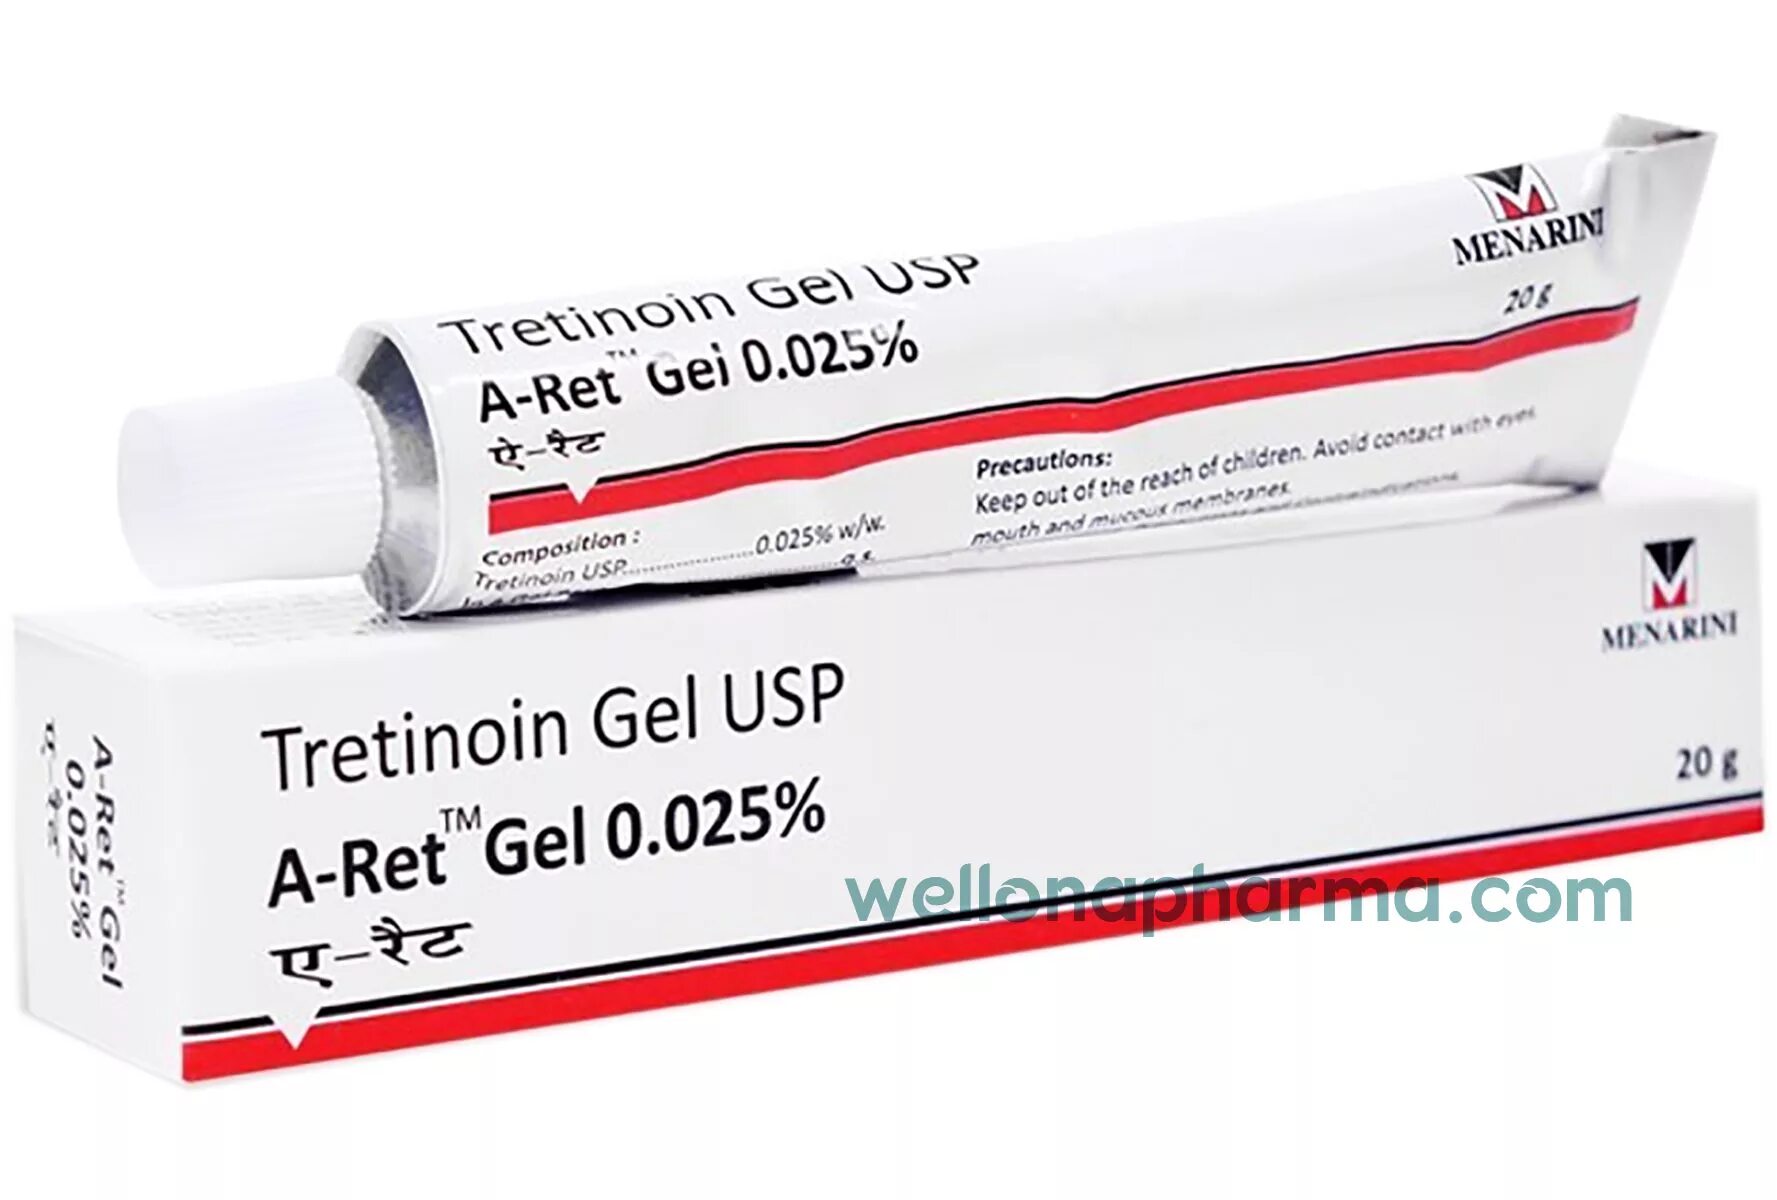 Tretinoin 0.025 гель. Tretinoin Cream 0.025. Tretinoin Gel USP 0.1. Третиноин гель ЮСП А-рет гель 0,1% tretinoin Gel USP A-Ret Gel 0.1% Menarini. Tretinoin gel usp